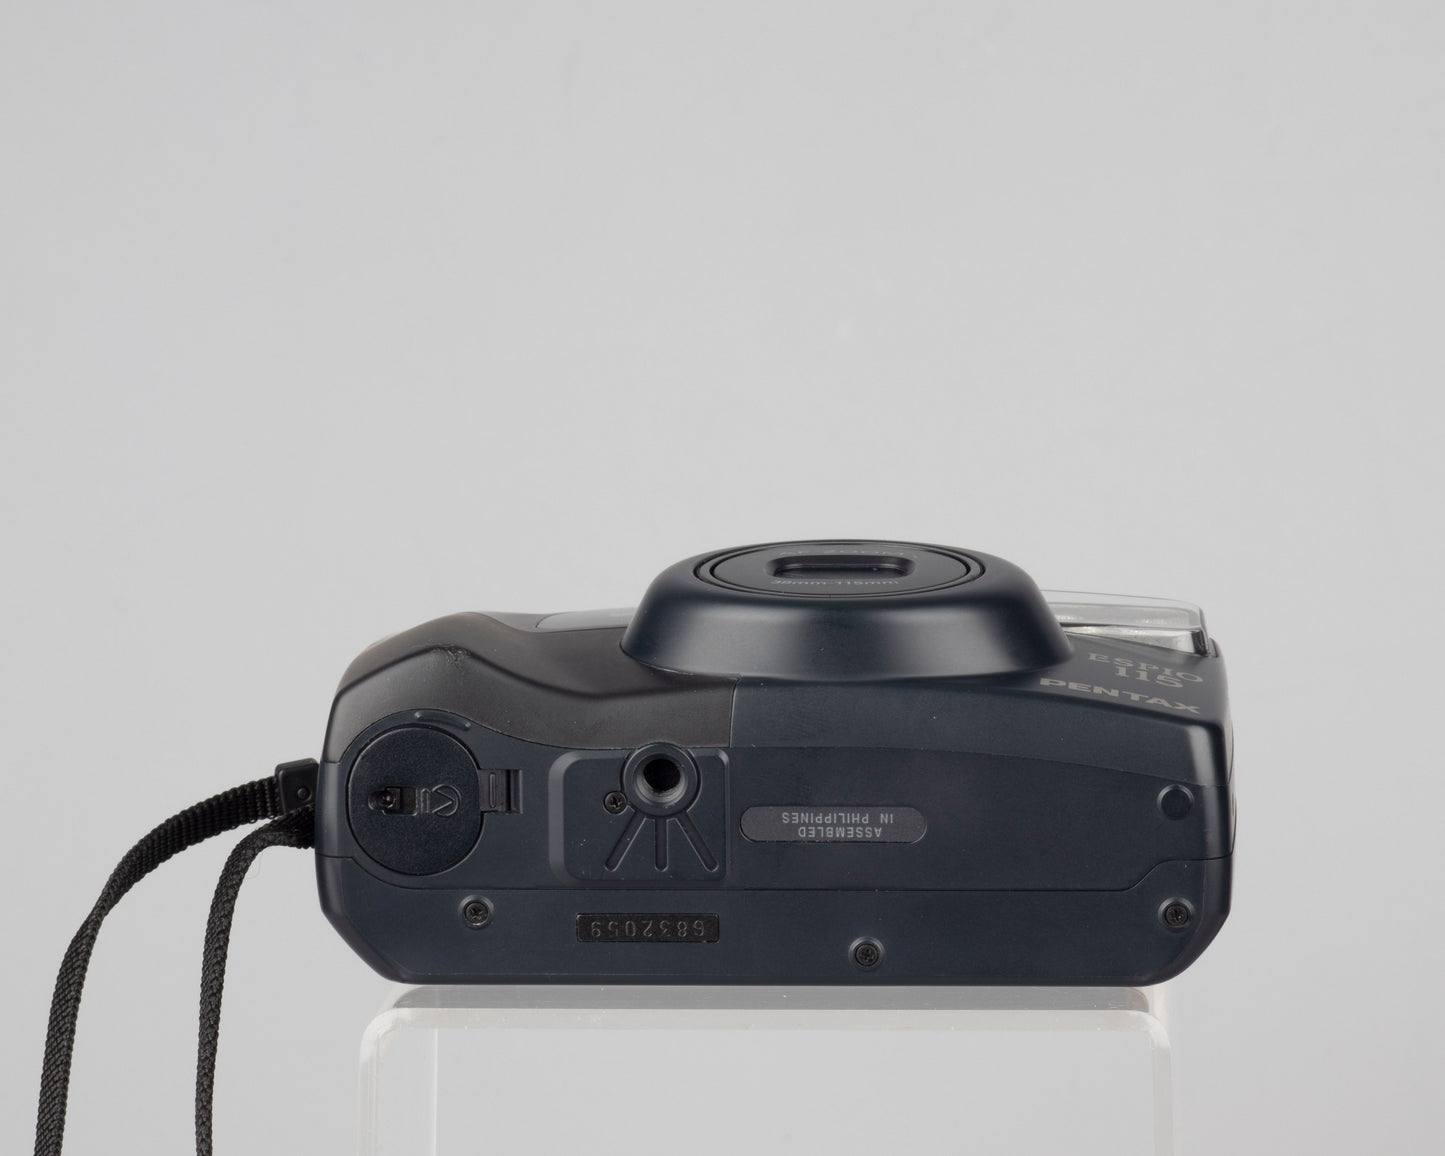 Pentax Espio 115 35mm camera w/ original case (serial 6832055)